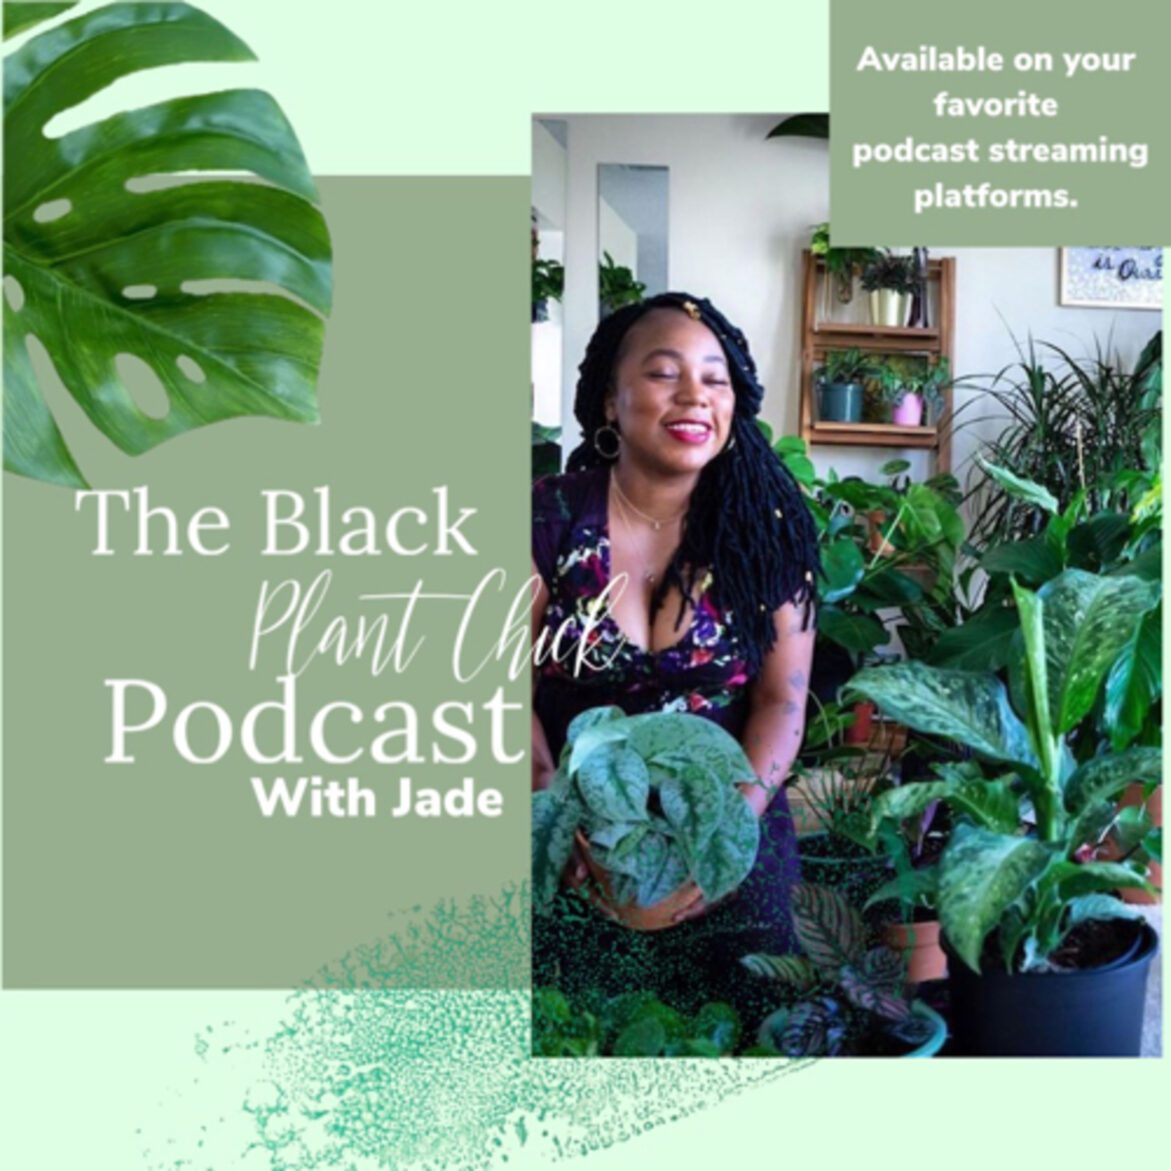 Black Podcasting - Happy New Year!